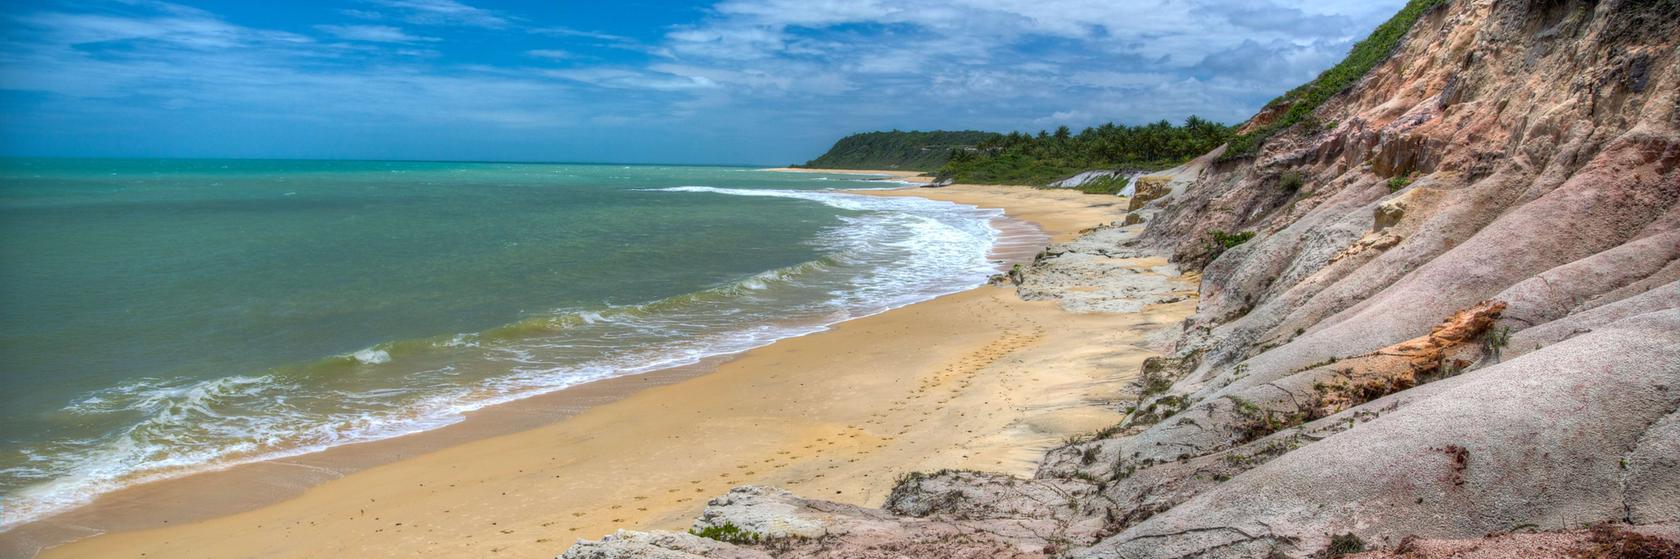 Tipy na výlety na severovýchodu Brazílie